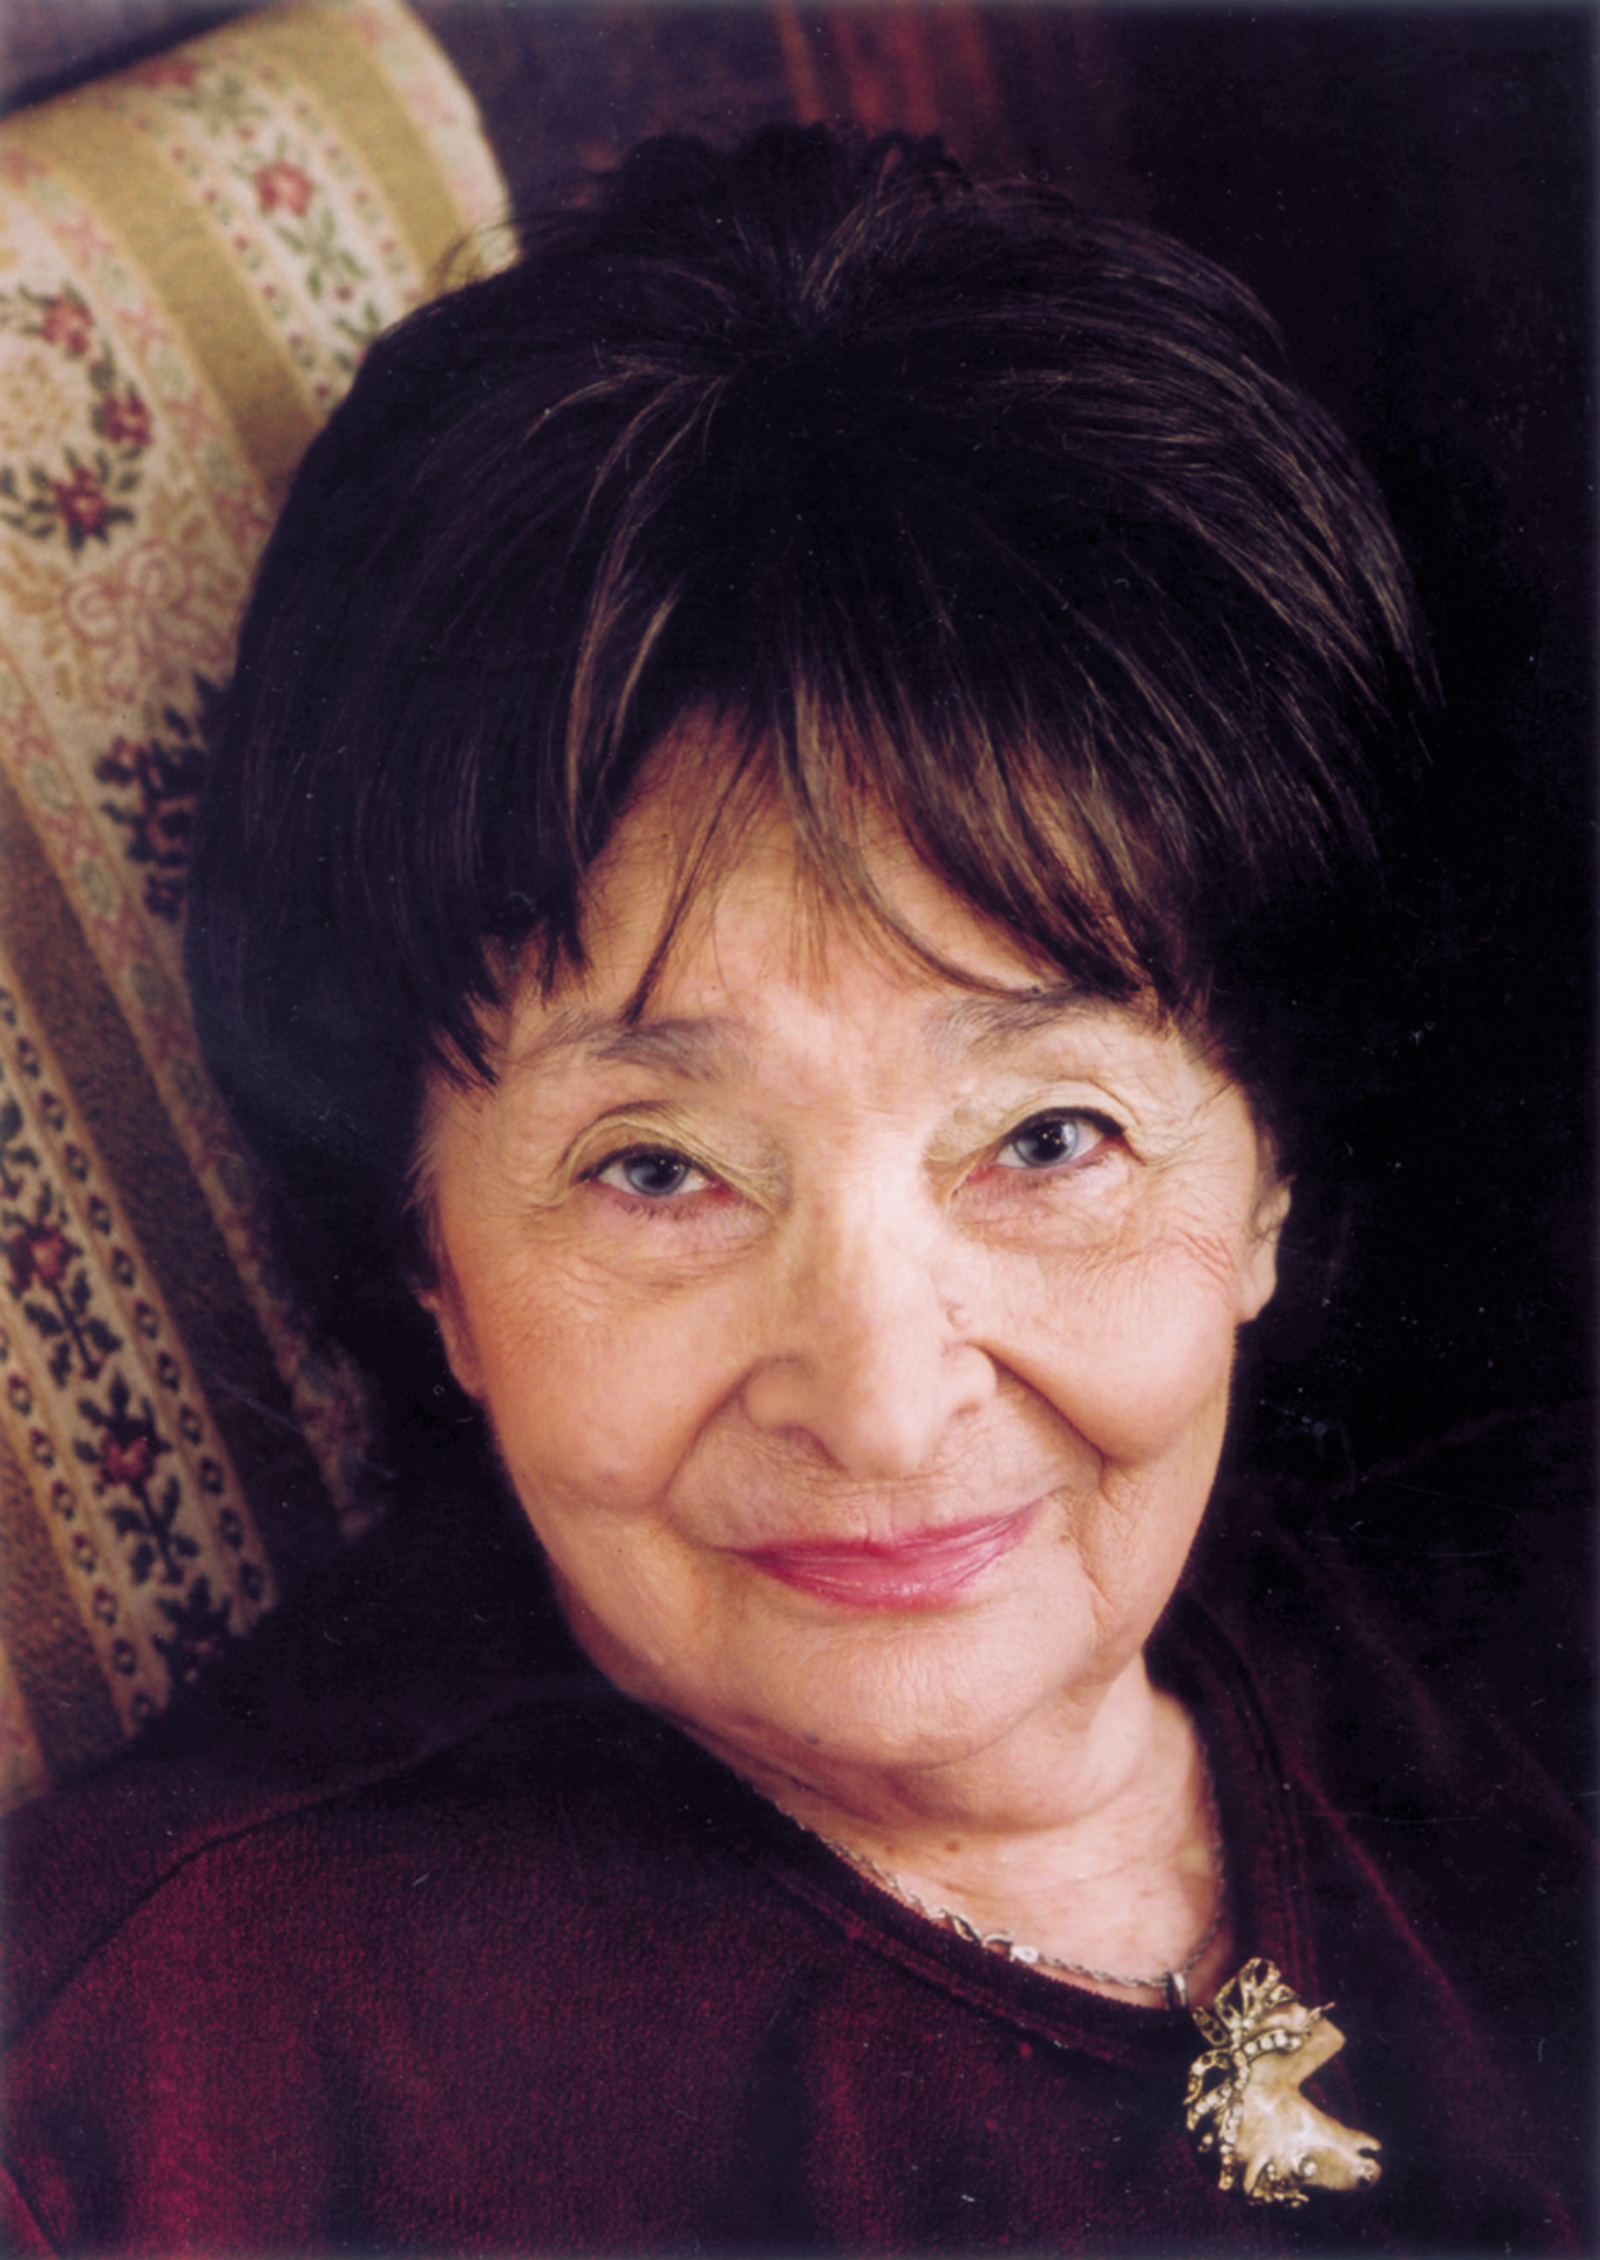 Magda Szabó, Budapest, circa 2003